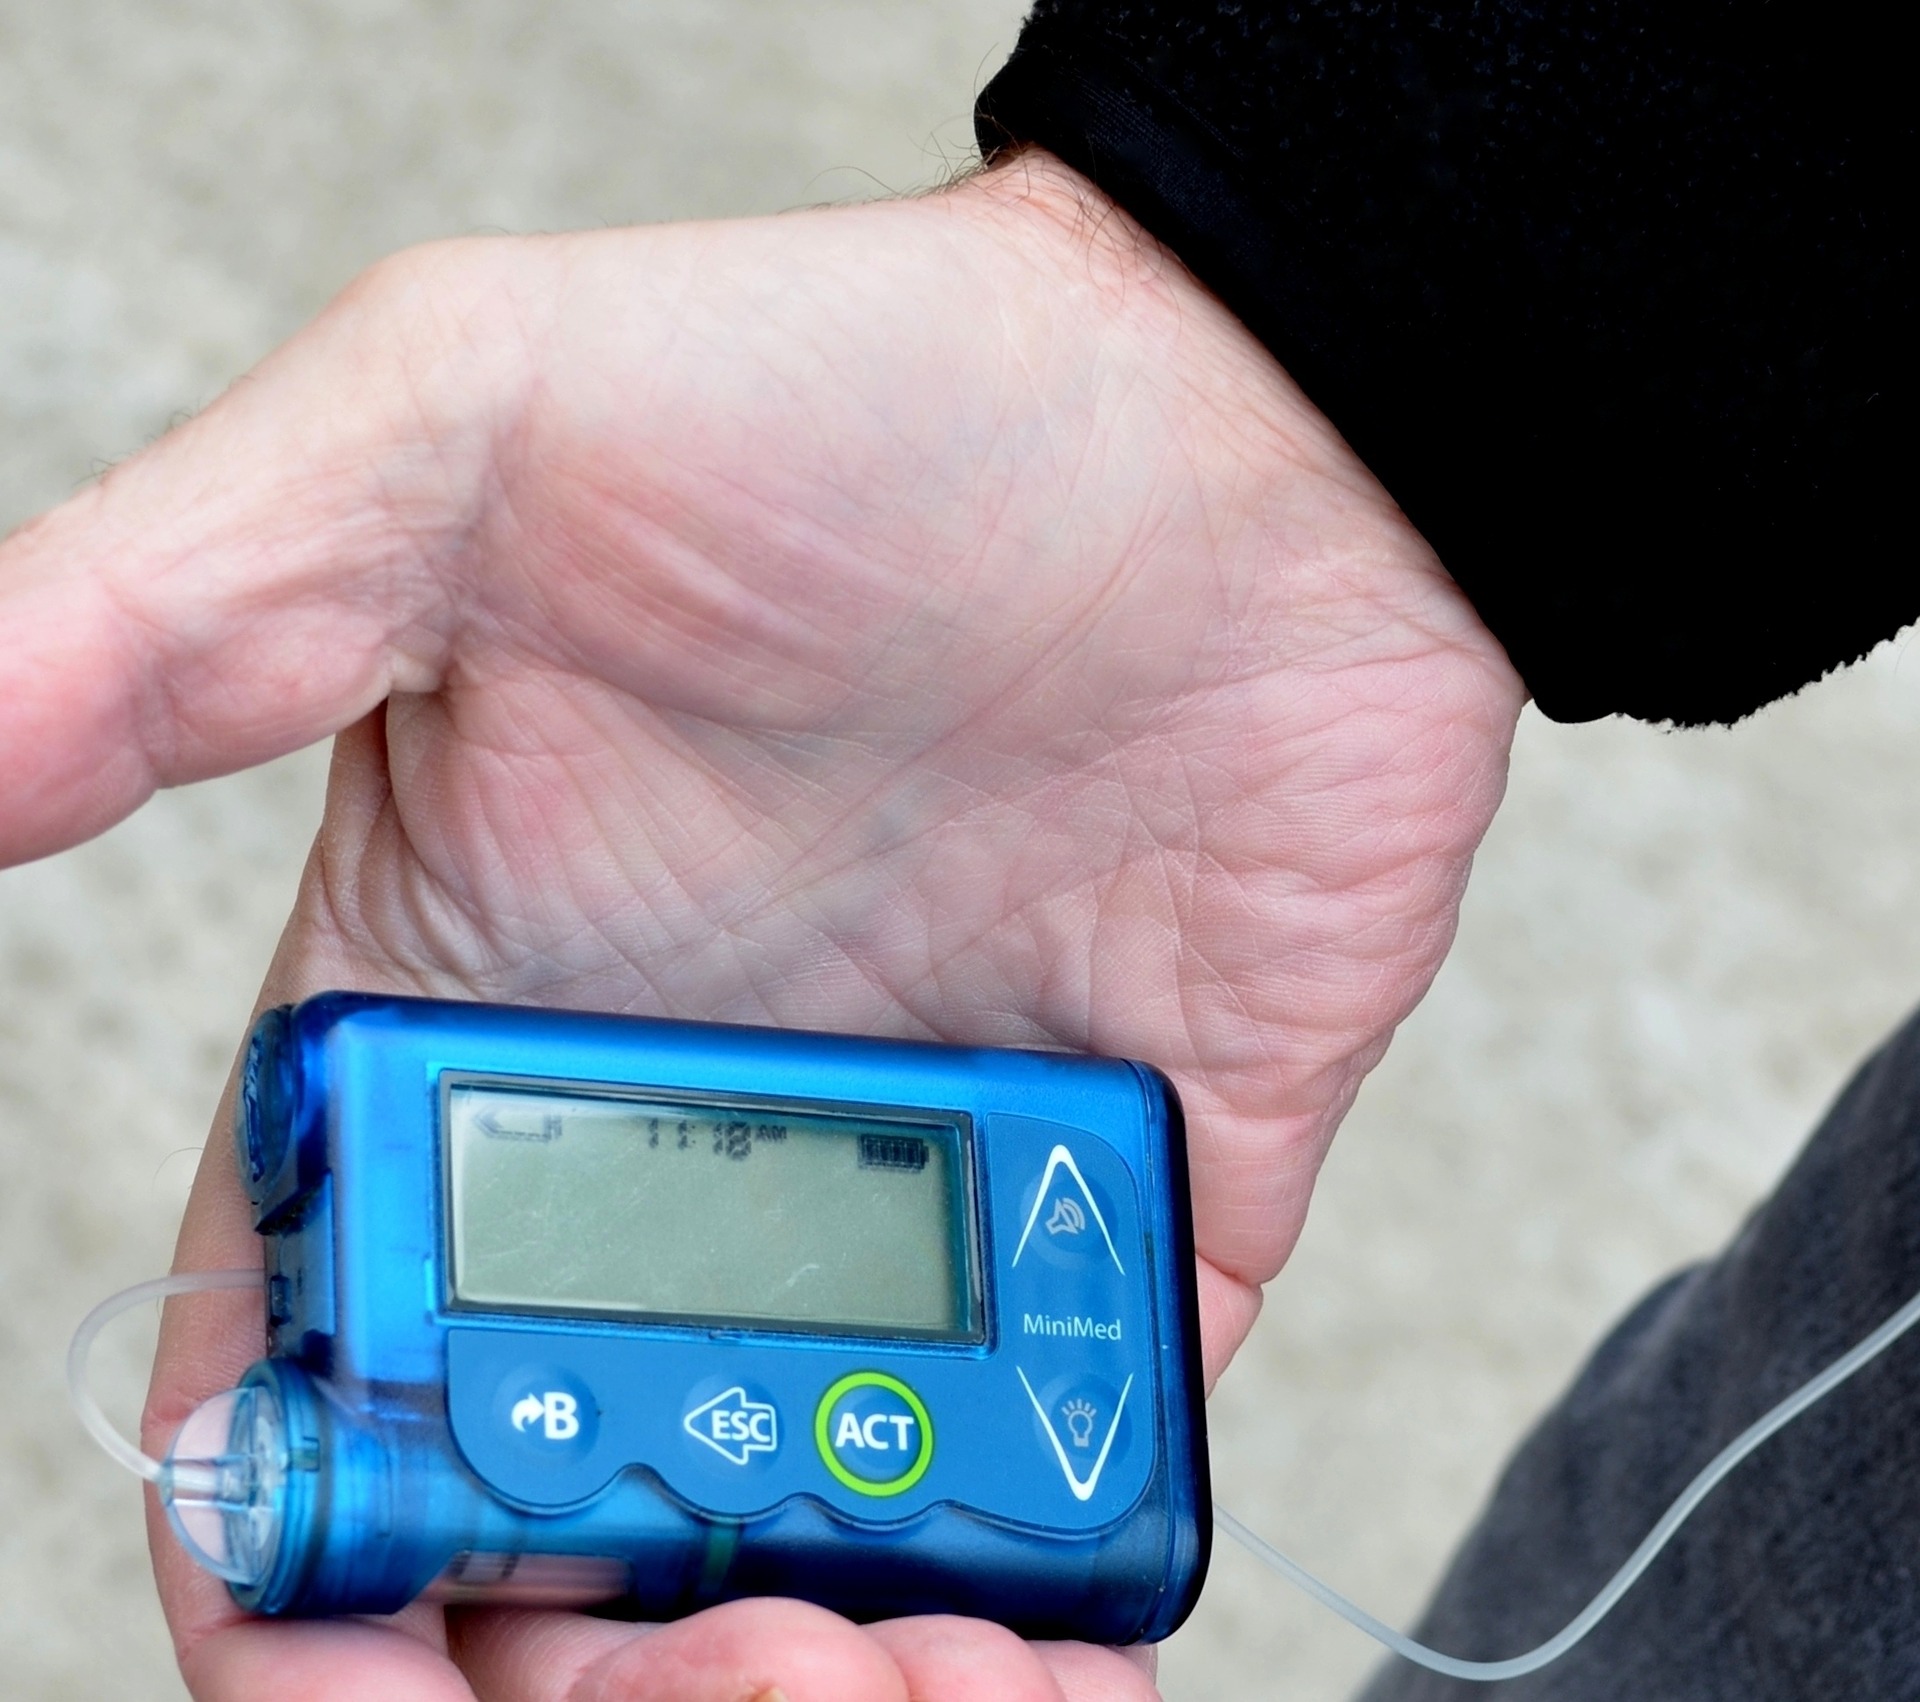 A portable insulin auto-injector